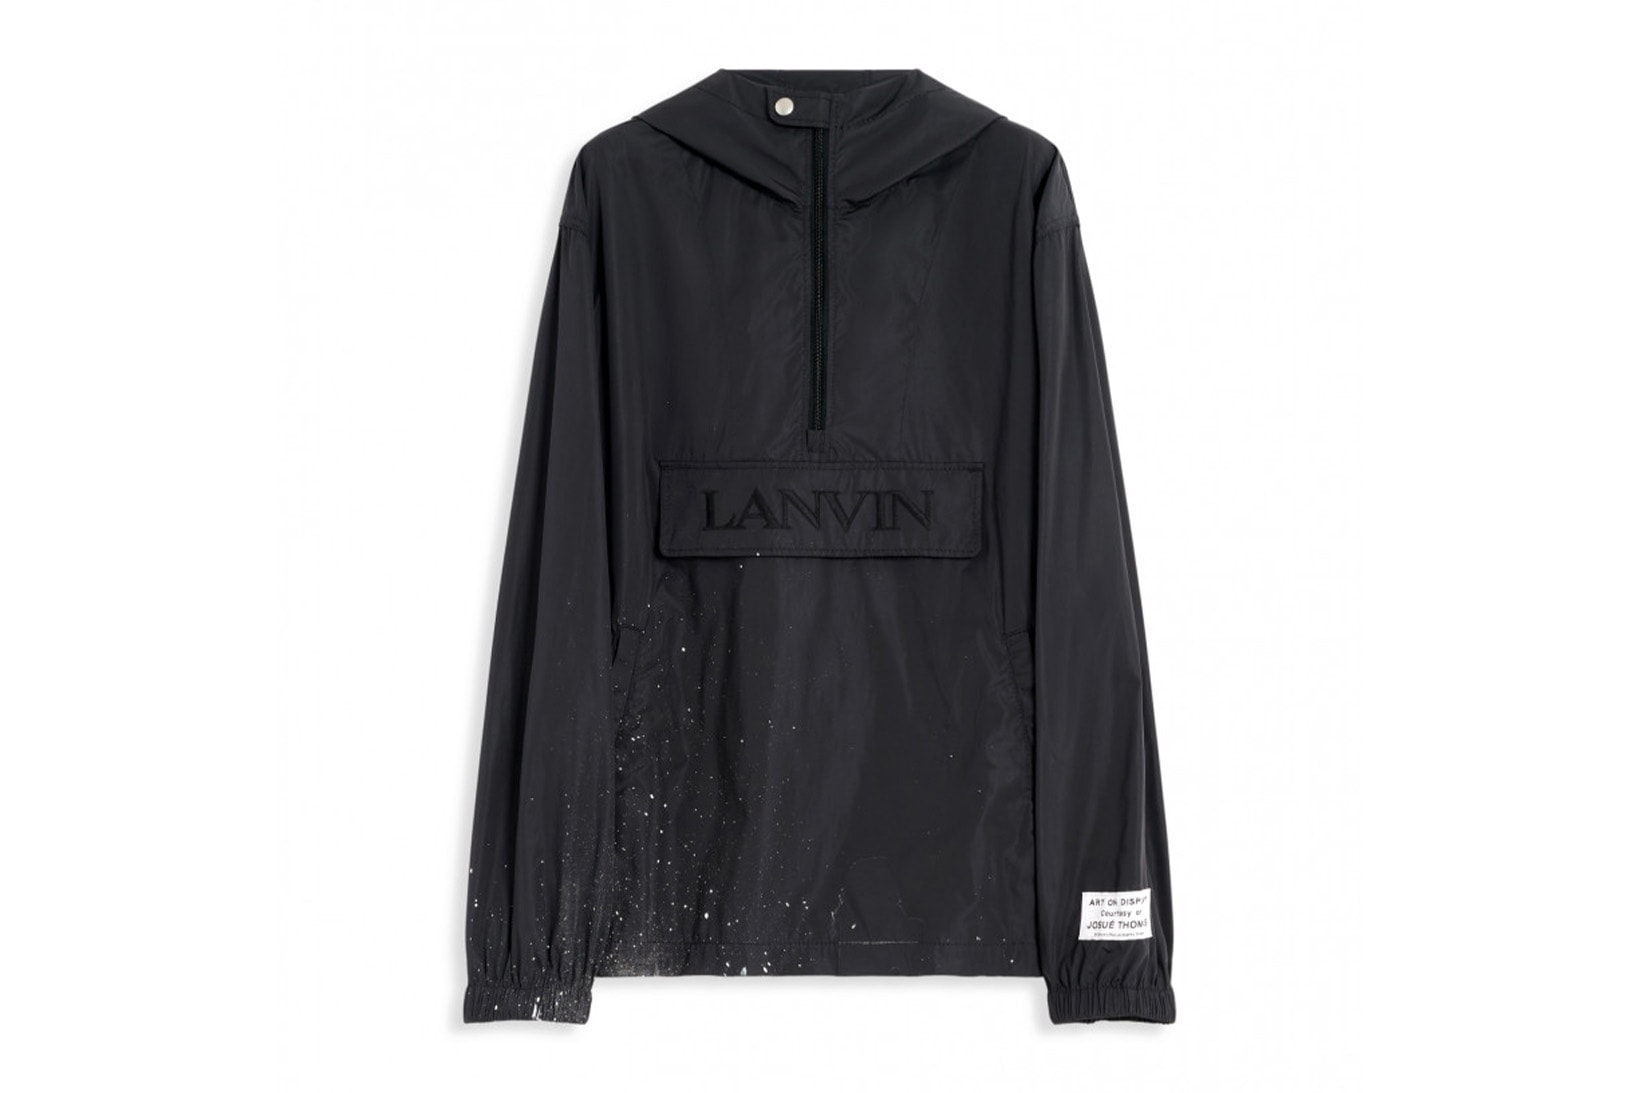 lanvin gallery dept collection hoodies sneakers t-shirts tees release info windbreaker black